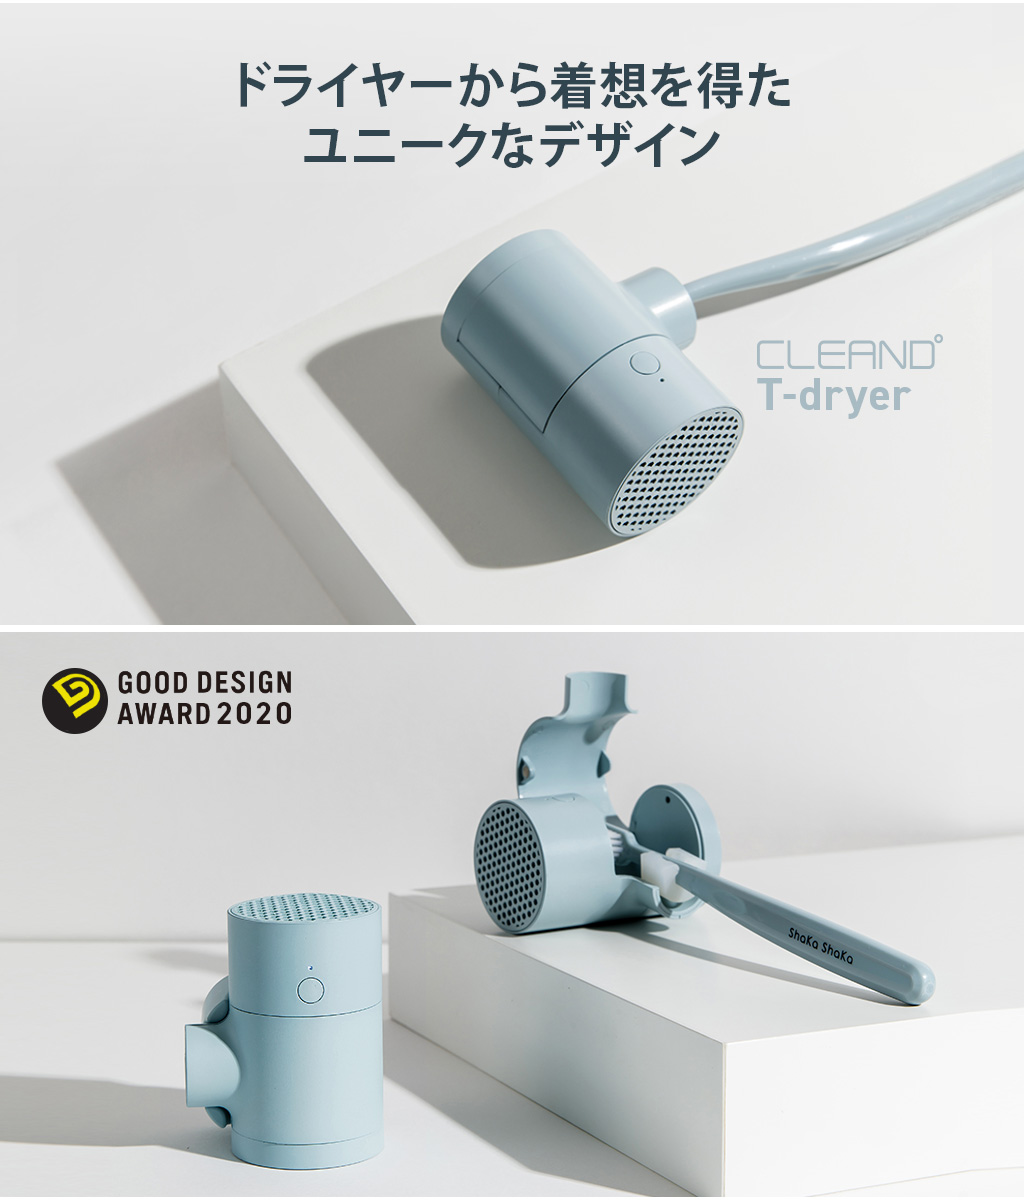 CLEAND 歯ブラシ UV除菌 乾燥器 T-dryer 【 UV除菌器 / コードレス/ USB Type-C 充電式 / 壁掛け可能